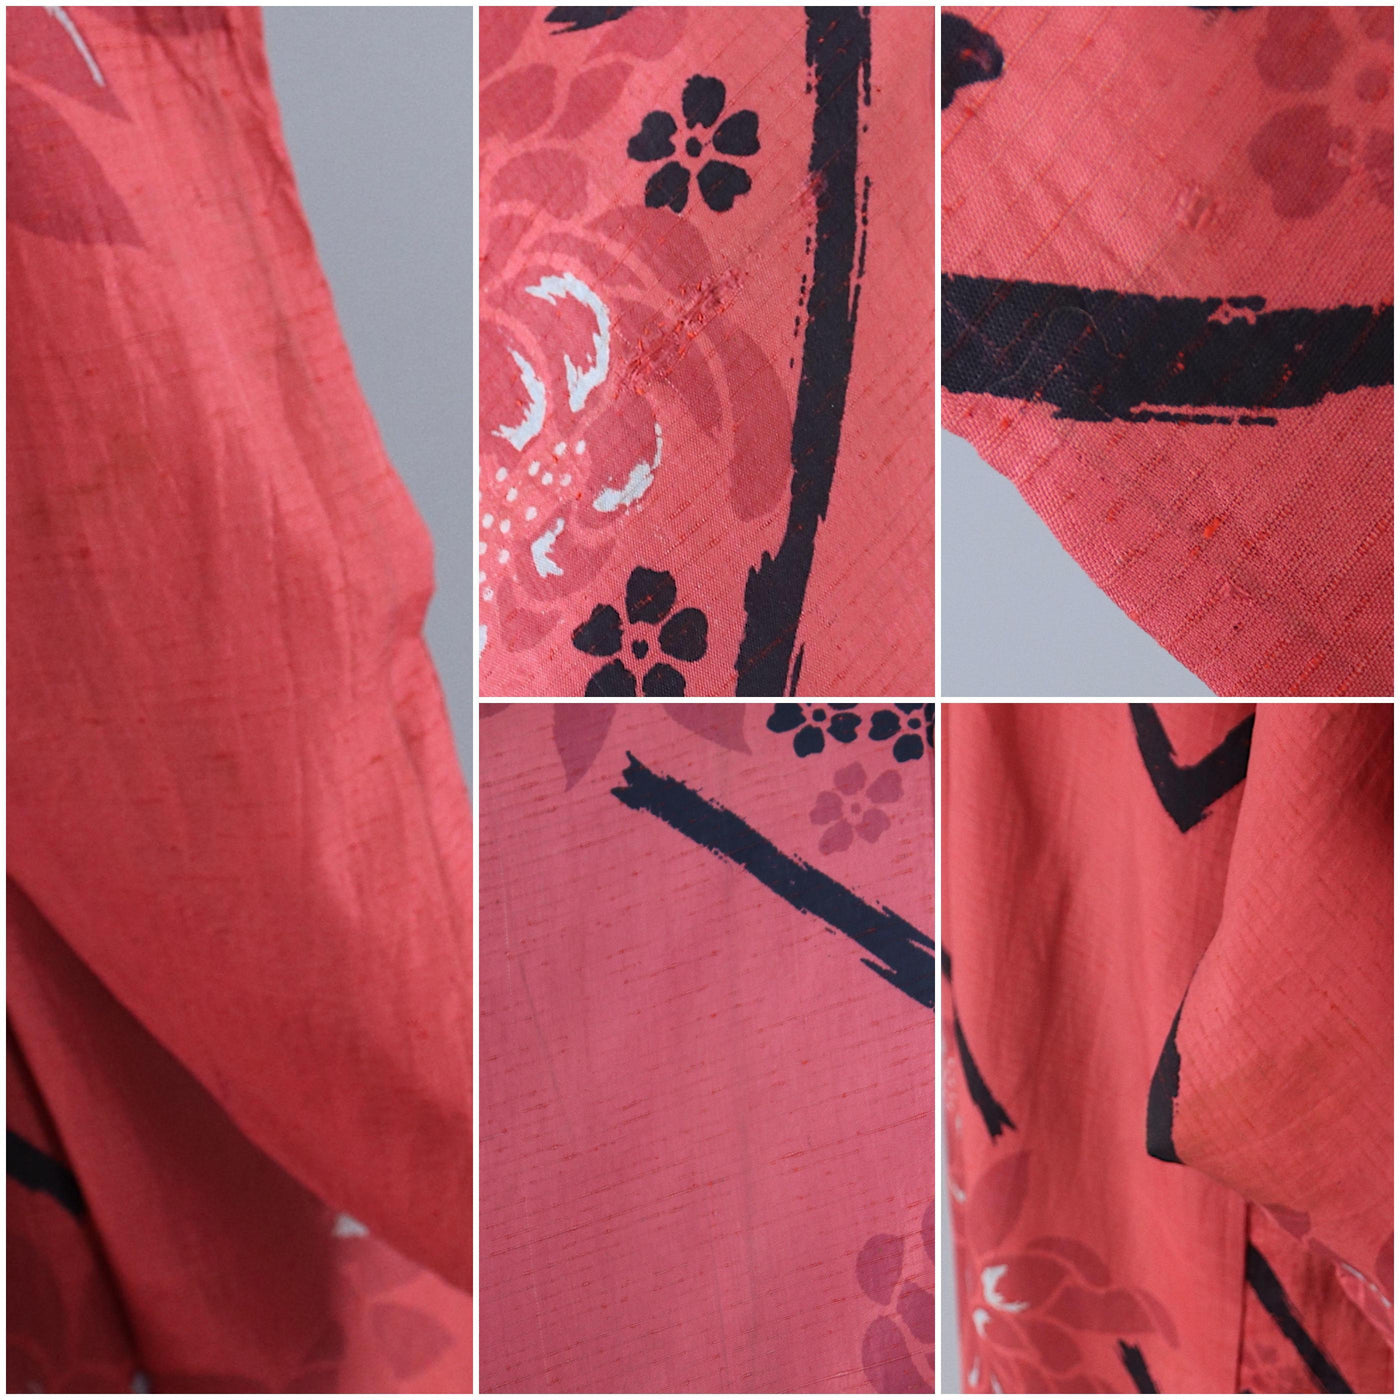 Vintage 1940s Silk Haori Kimono Jacket / Red & Black Floral Raw Silk - ThisBlueBird